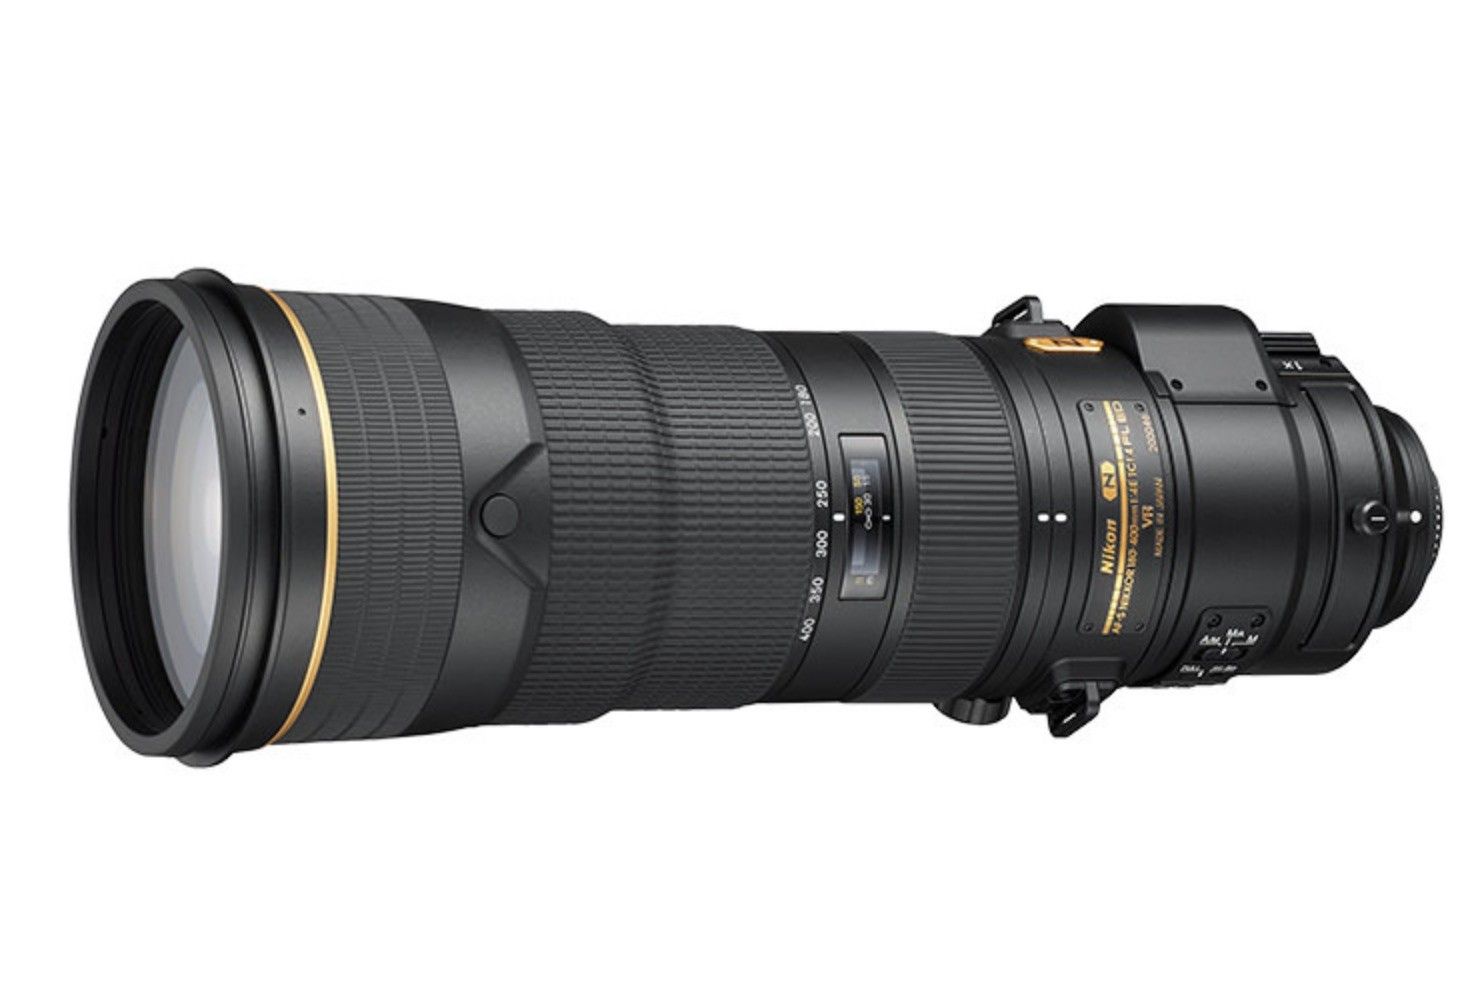 Nikon Enters 180-400mm Super Zoom Lens Into the Telephoto Race